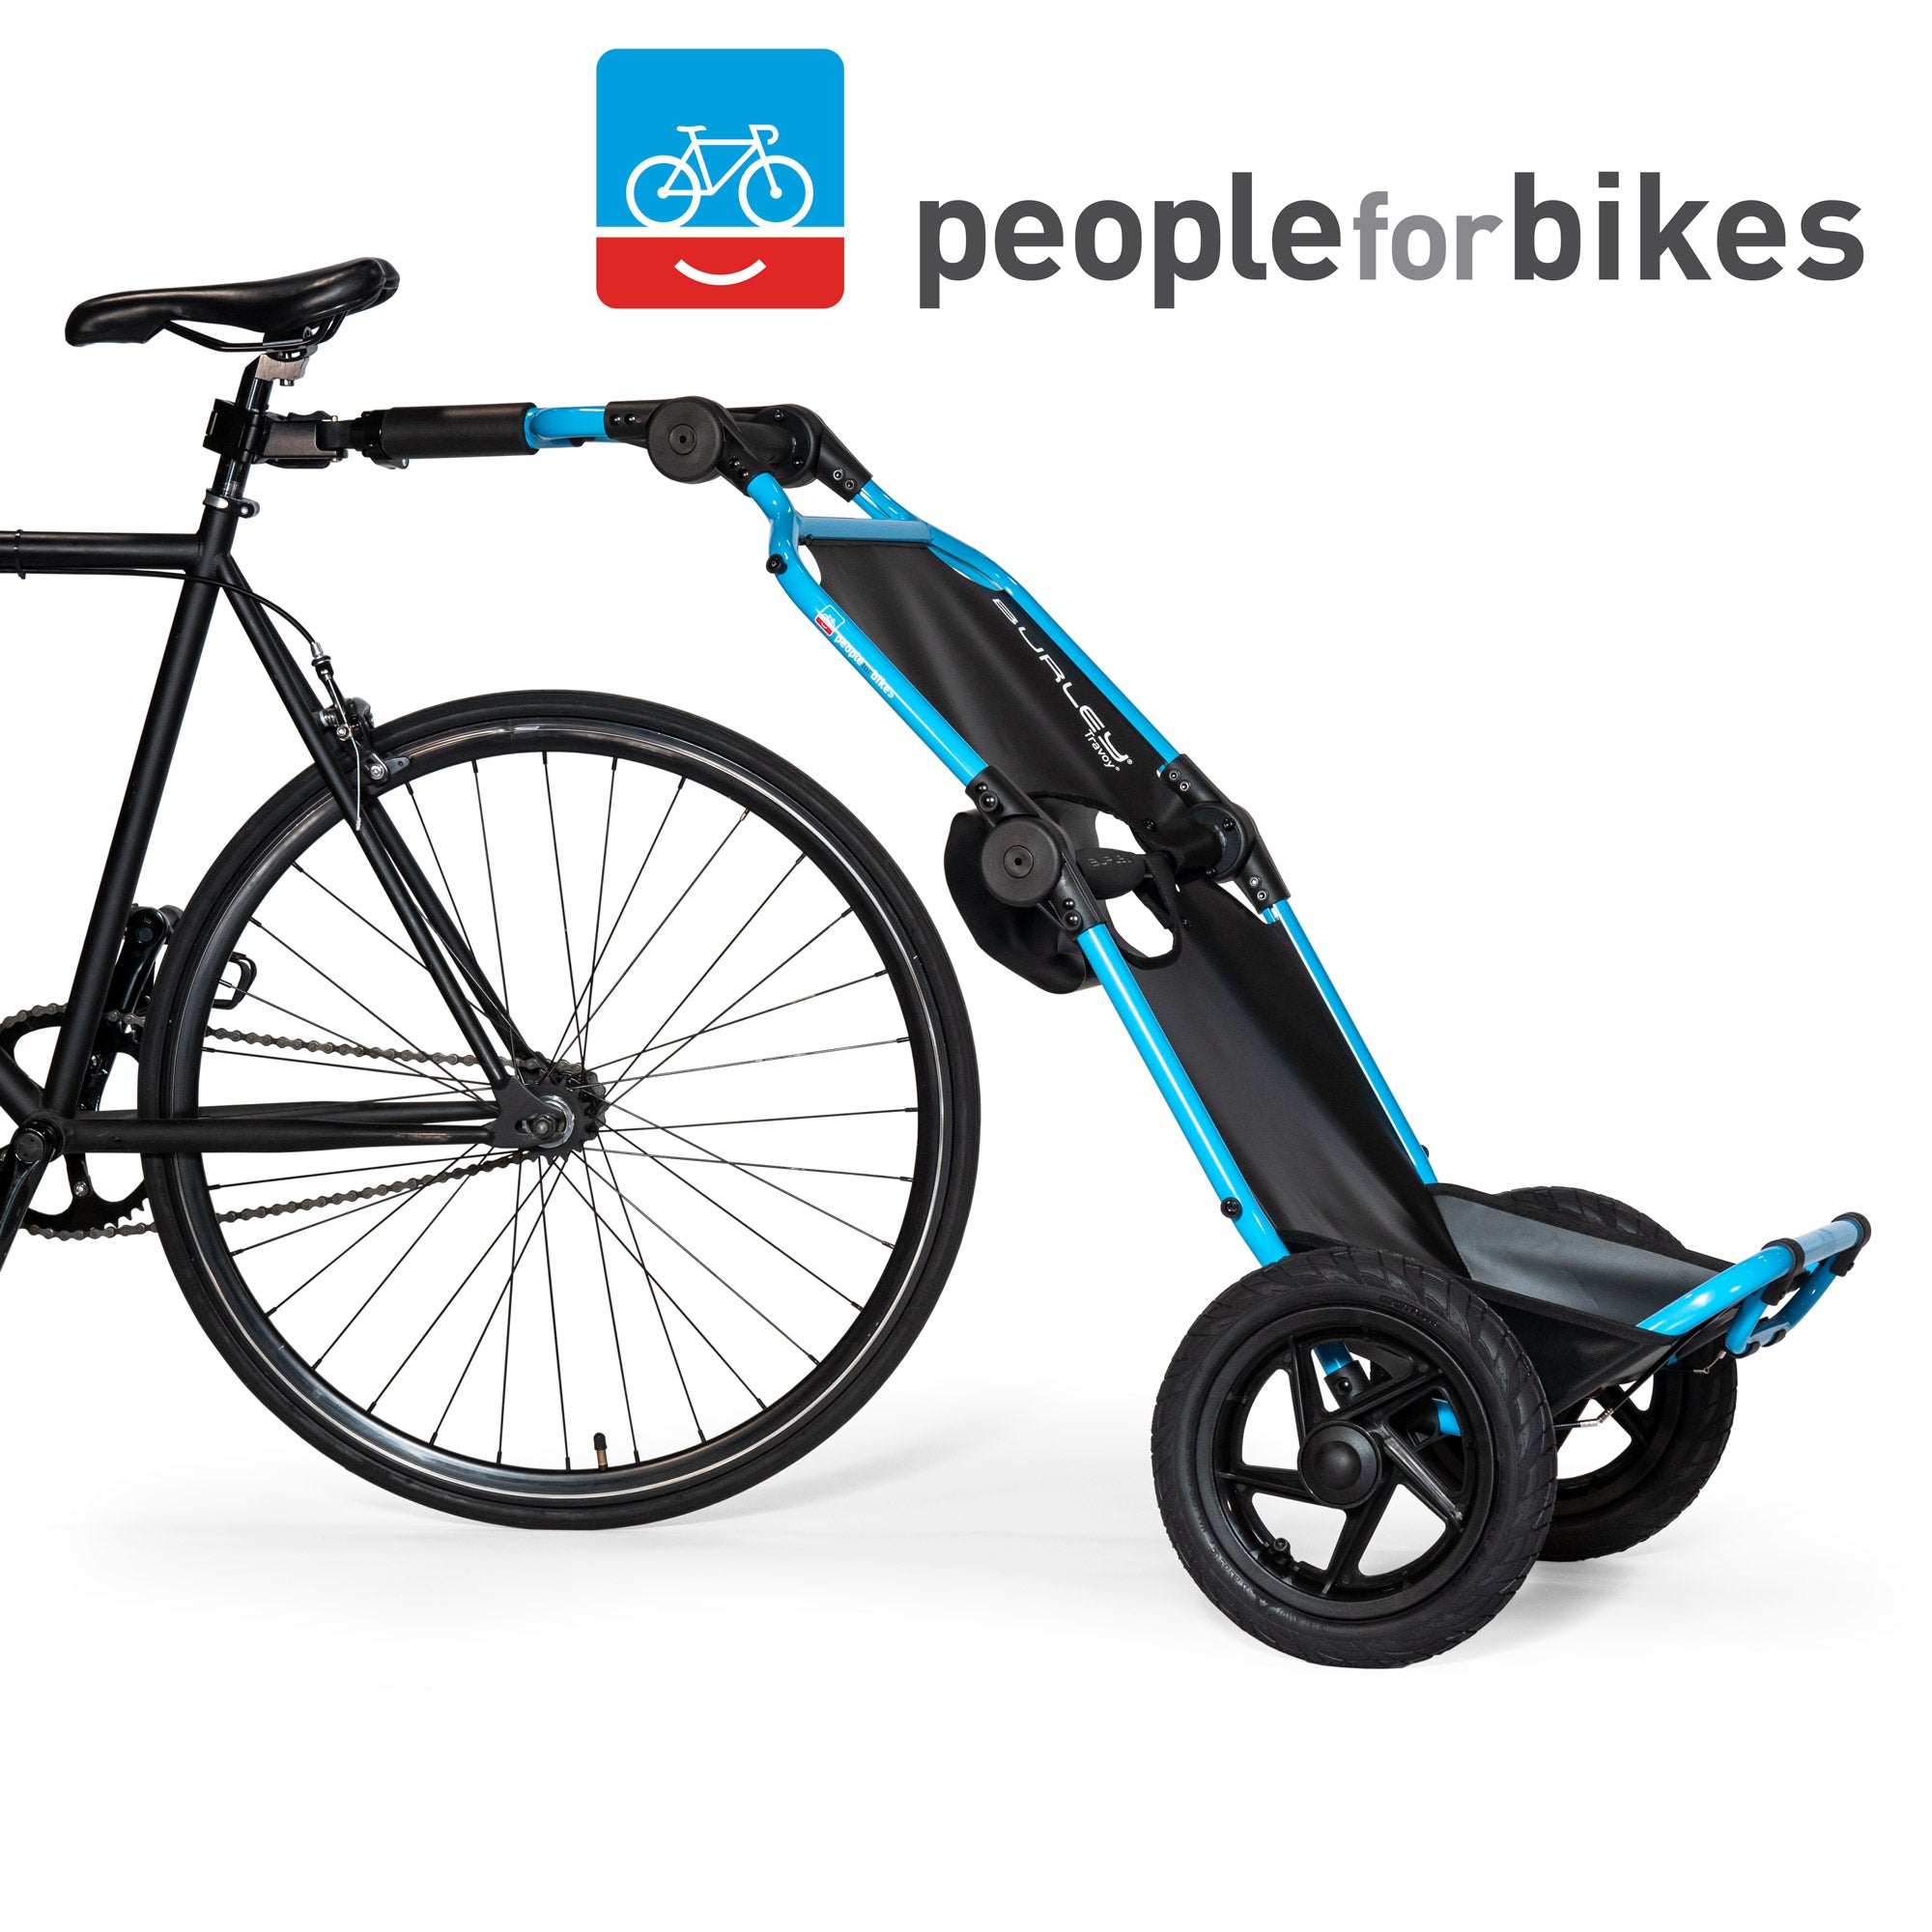 Burley and PeopleForBikes Promote Bike Commuting